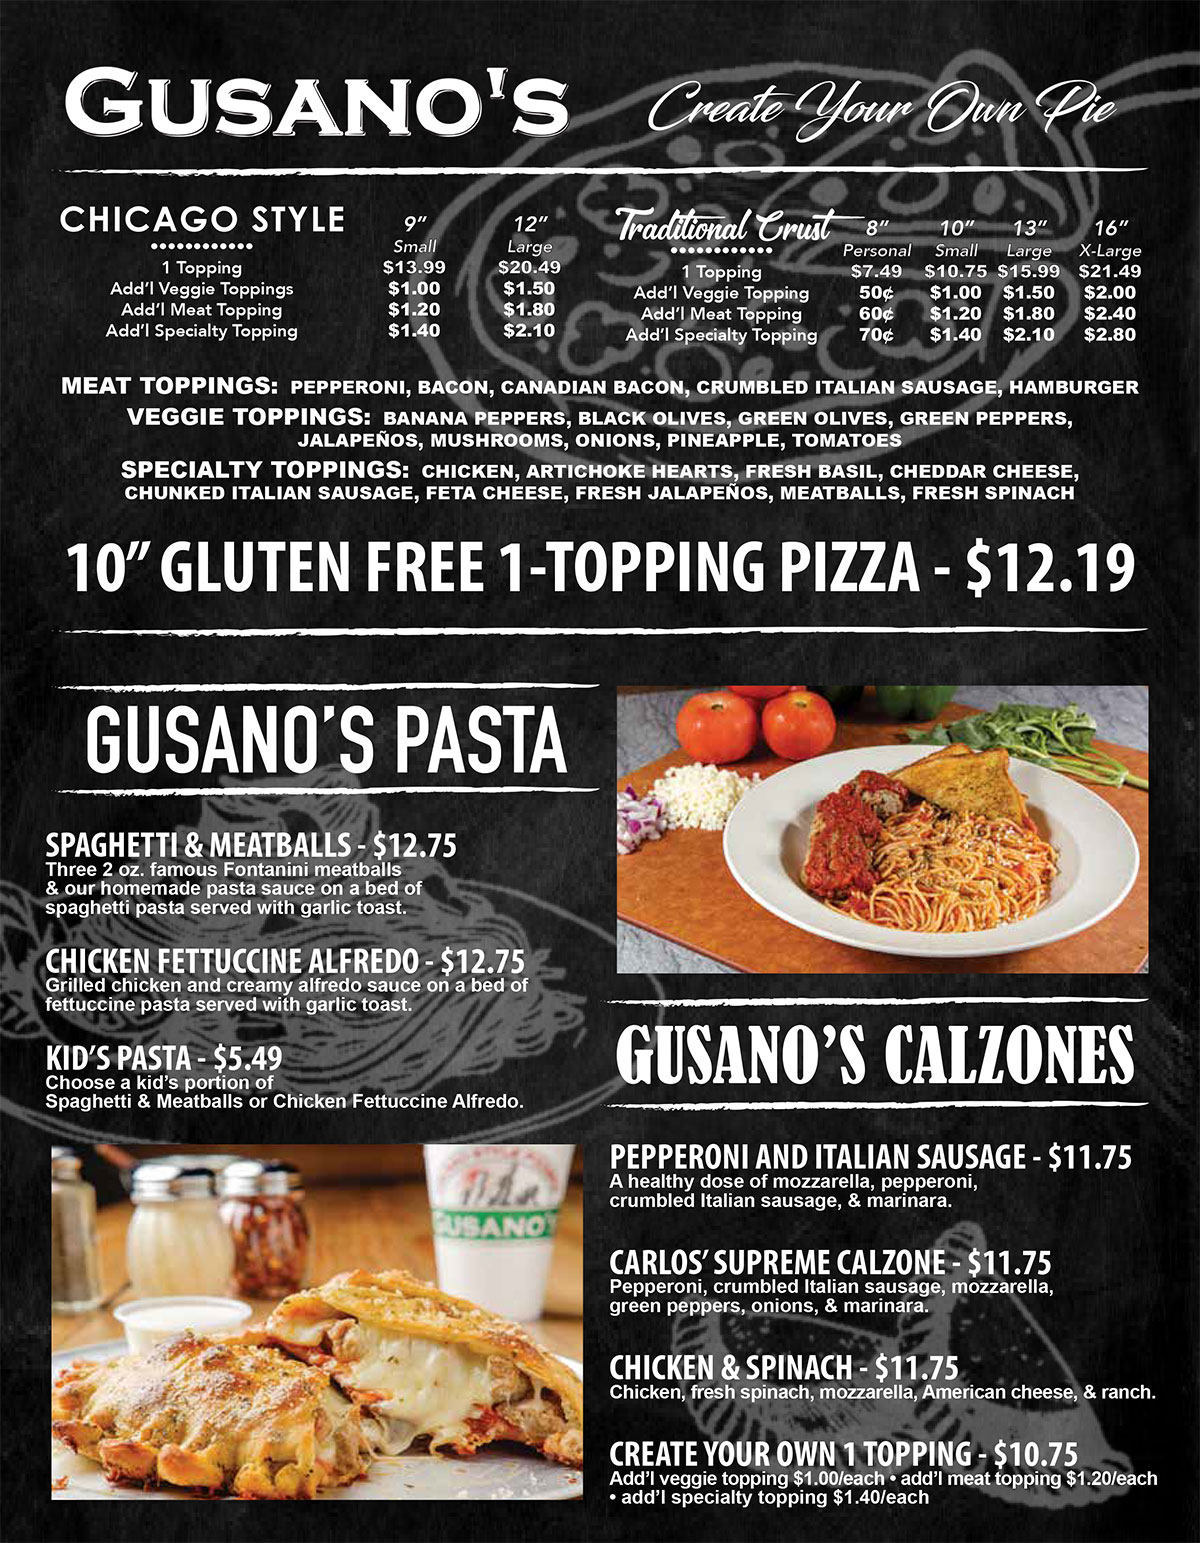 Gusano's Chicago-Style Pizzeria - Menu